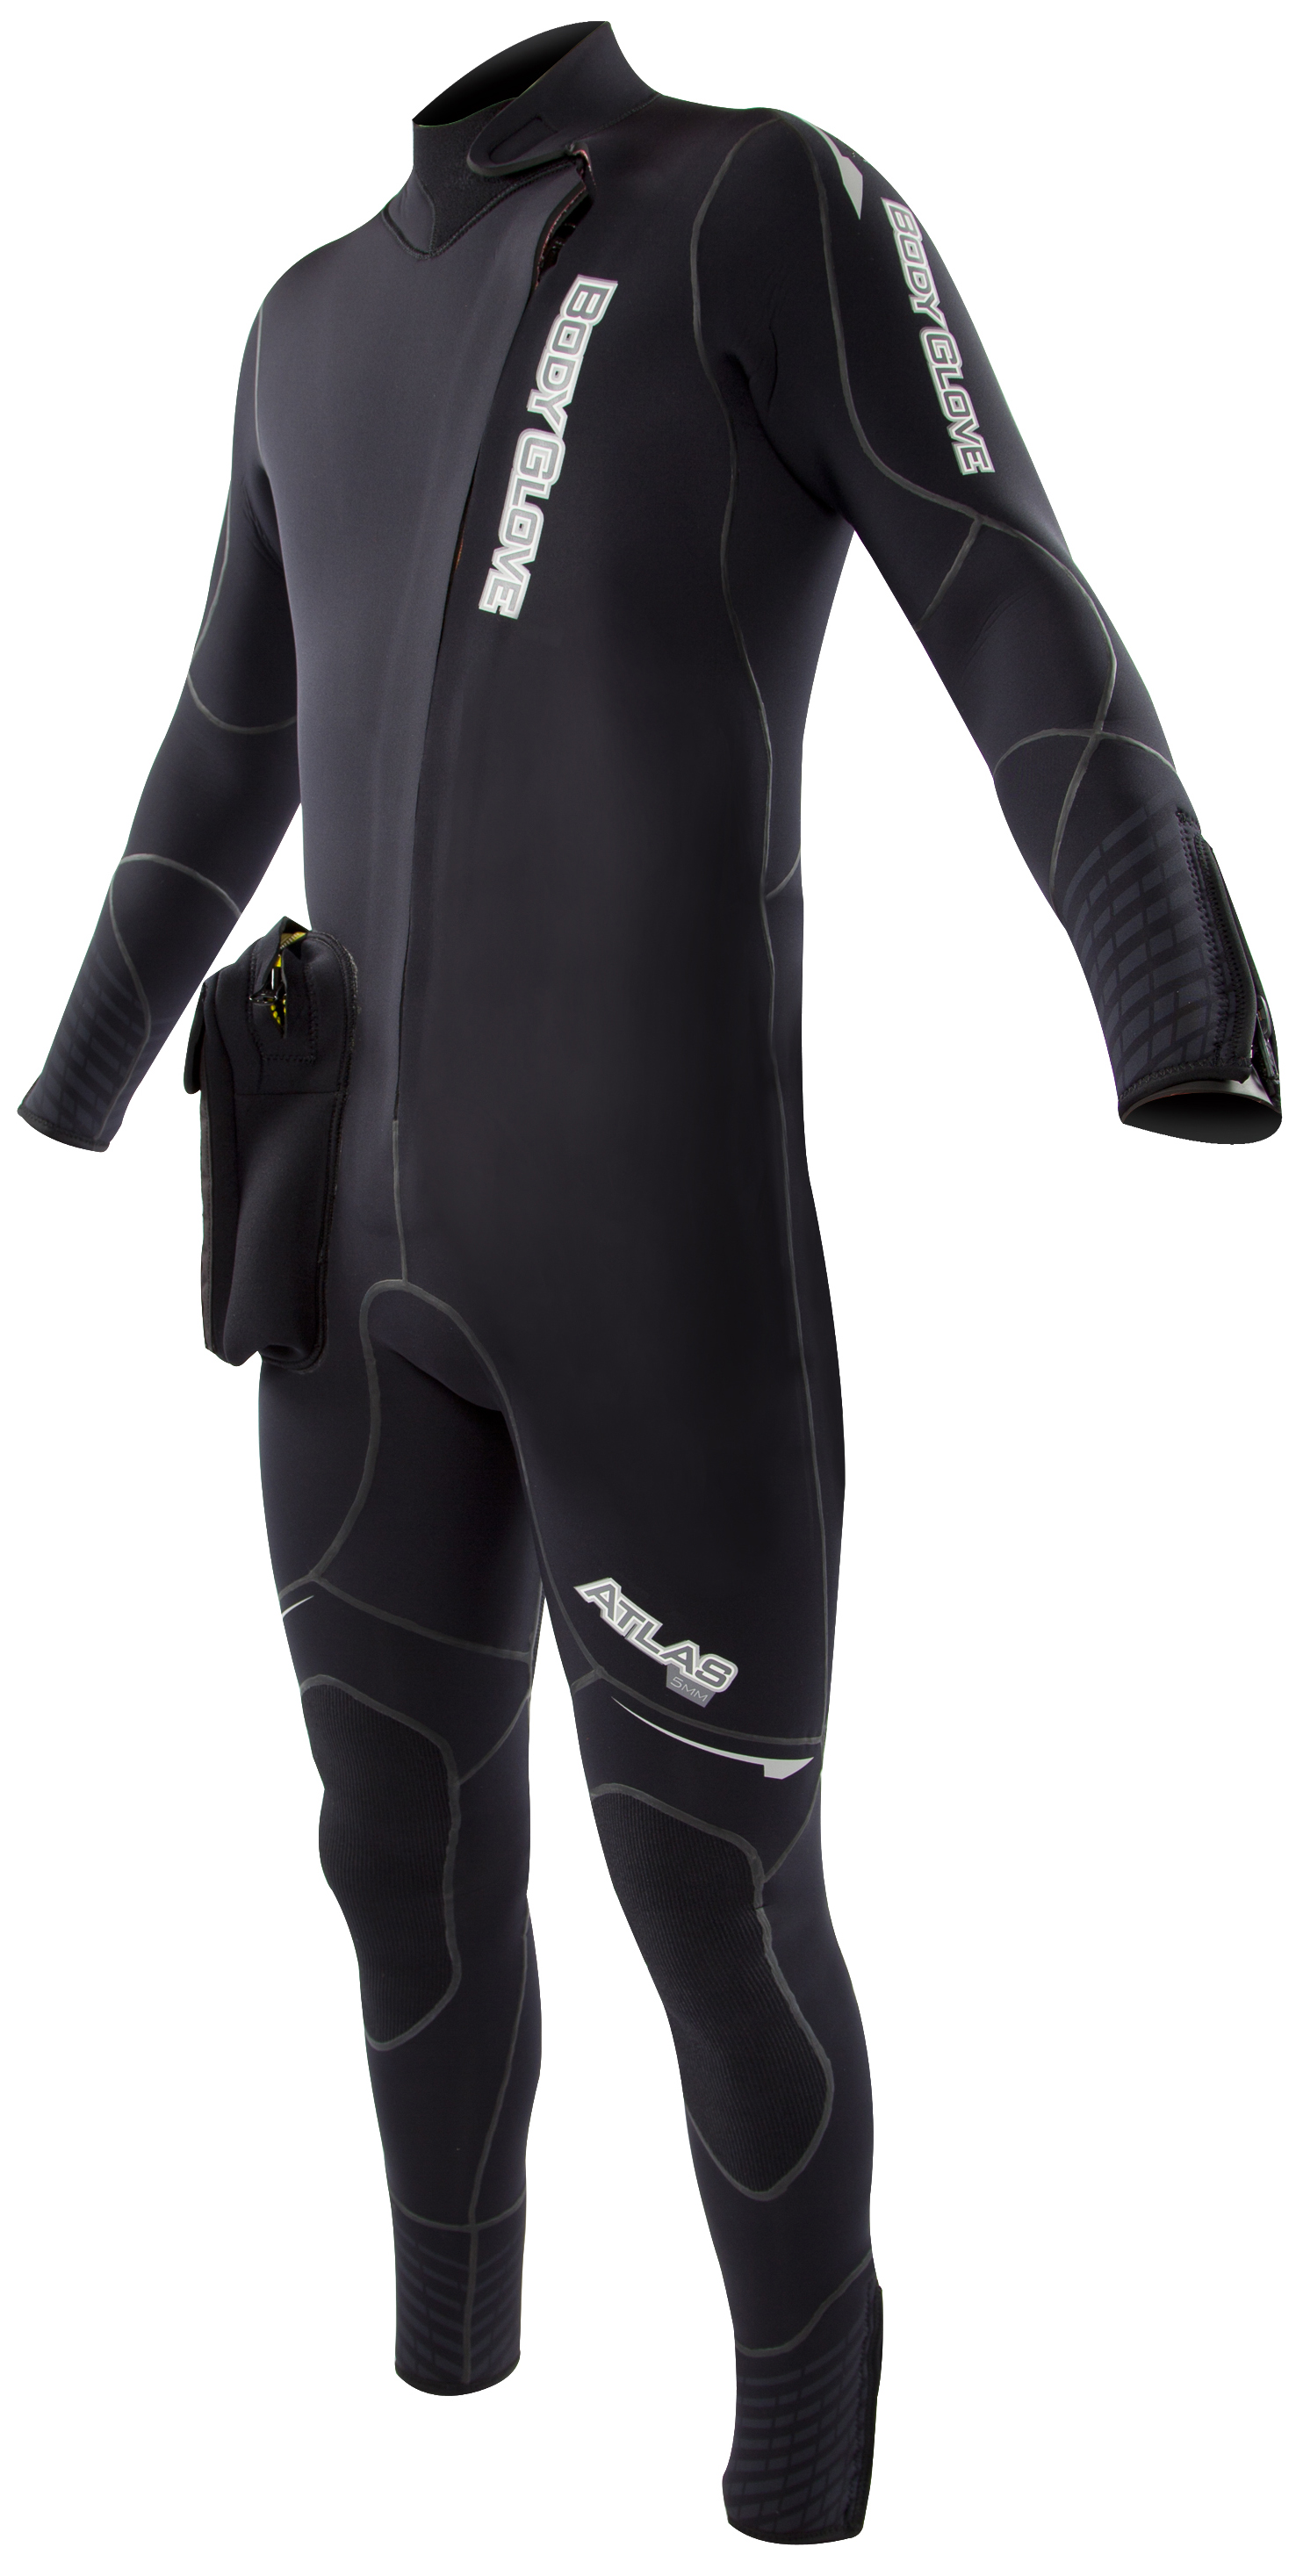 NeoSport Waterman 7mm Step-in Jacket Scuba Diving Wetsuit Men's Black All Sizes